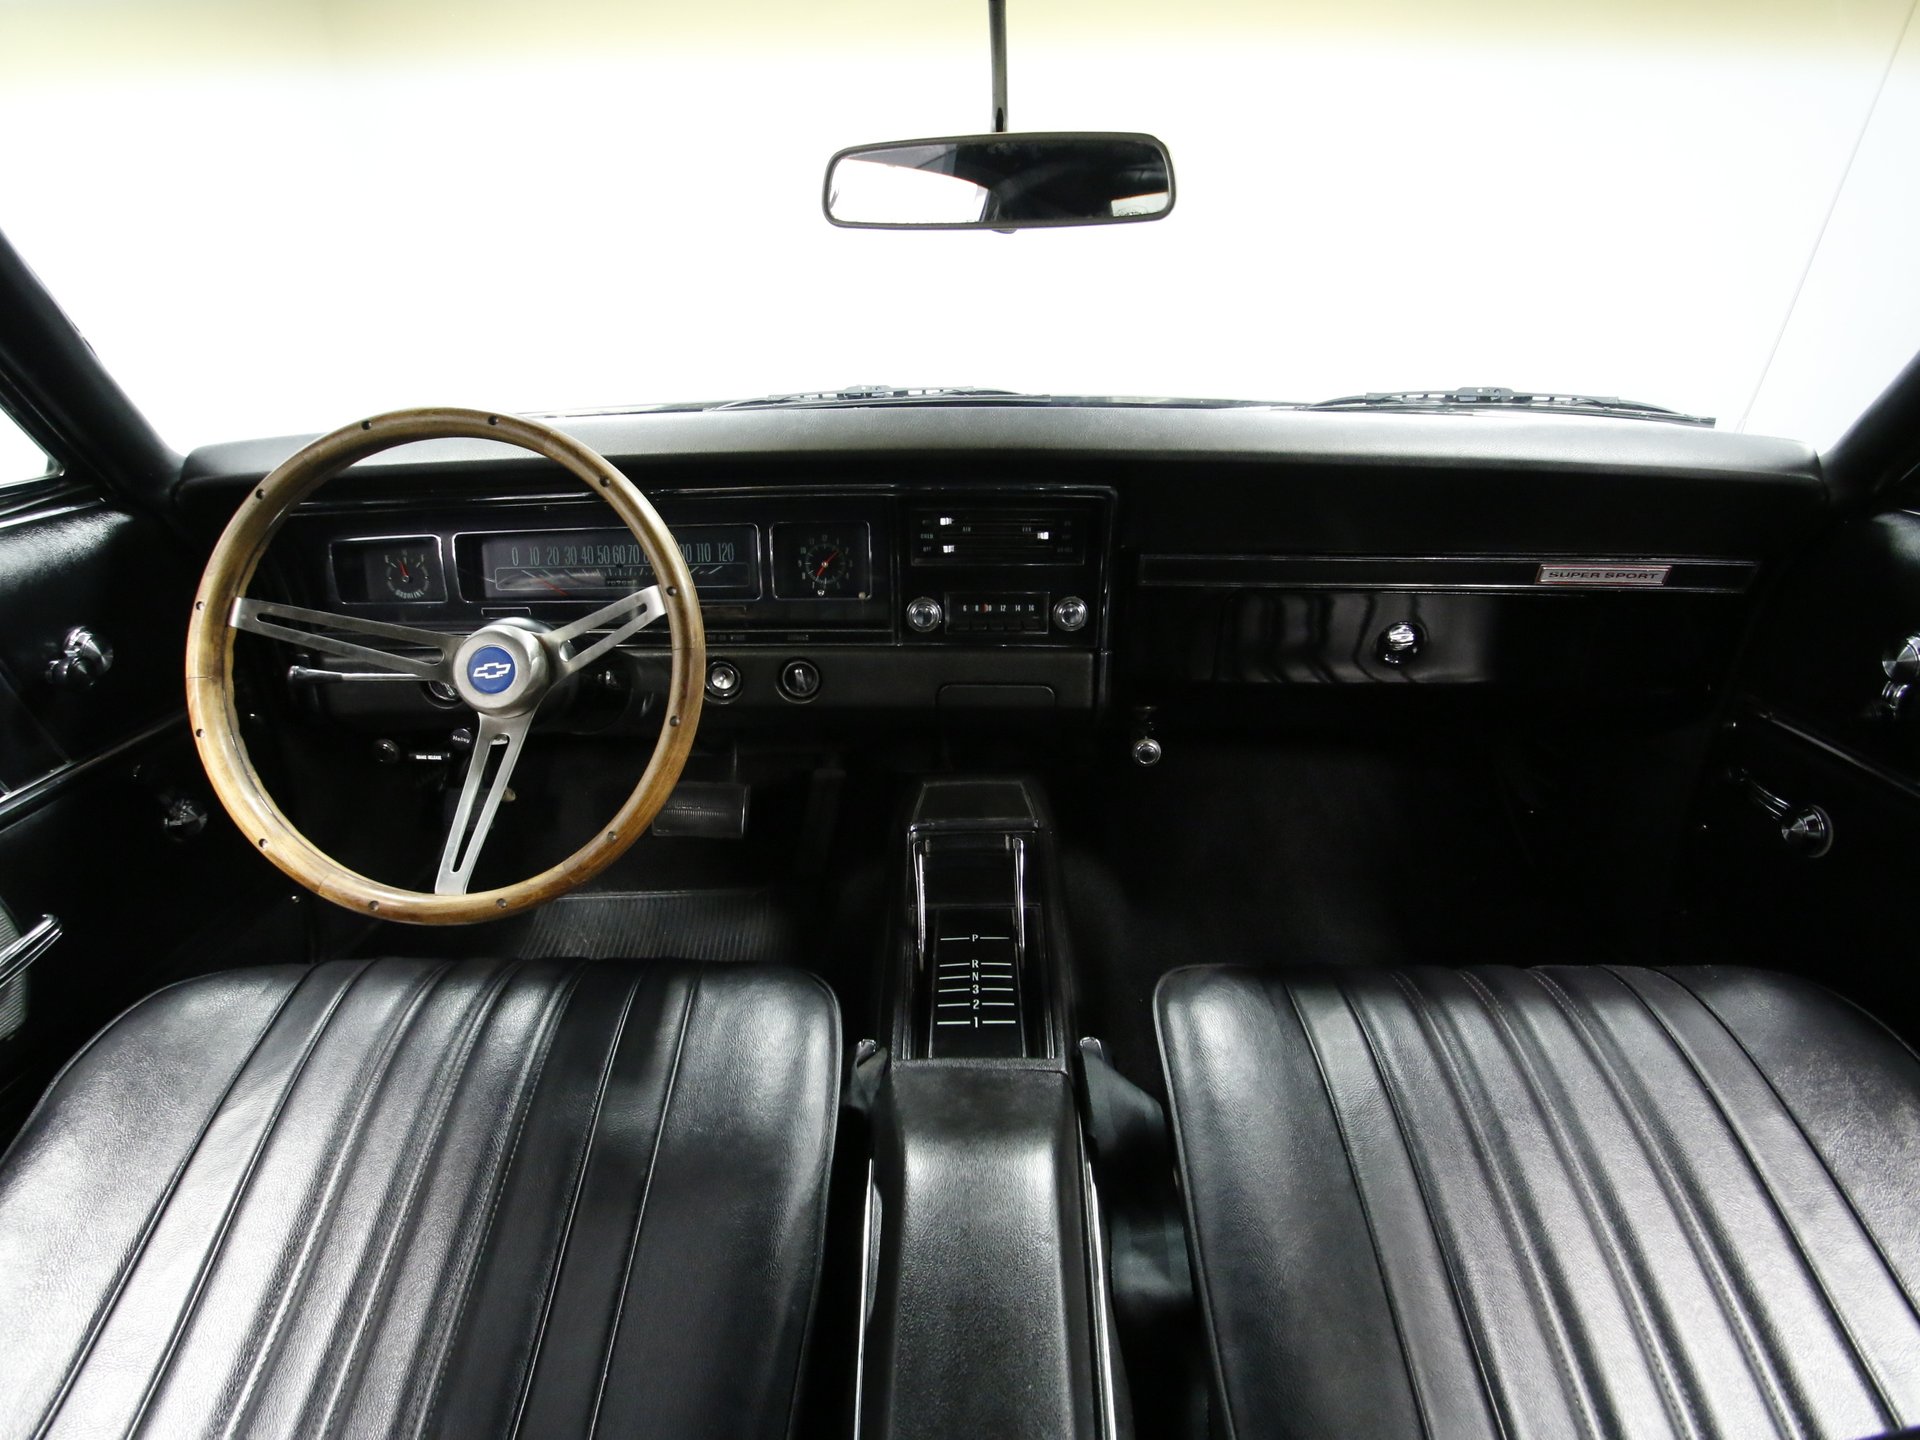 1968 Chevrolet Impala Berlin Motors